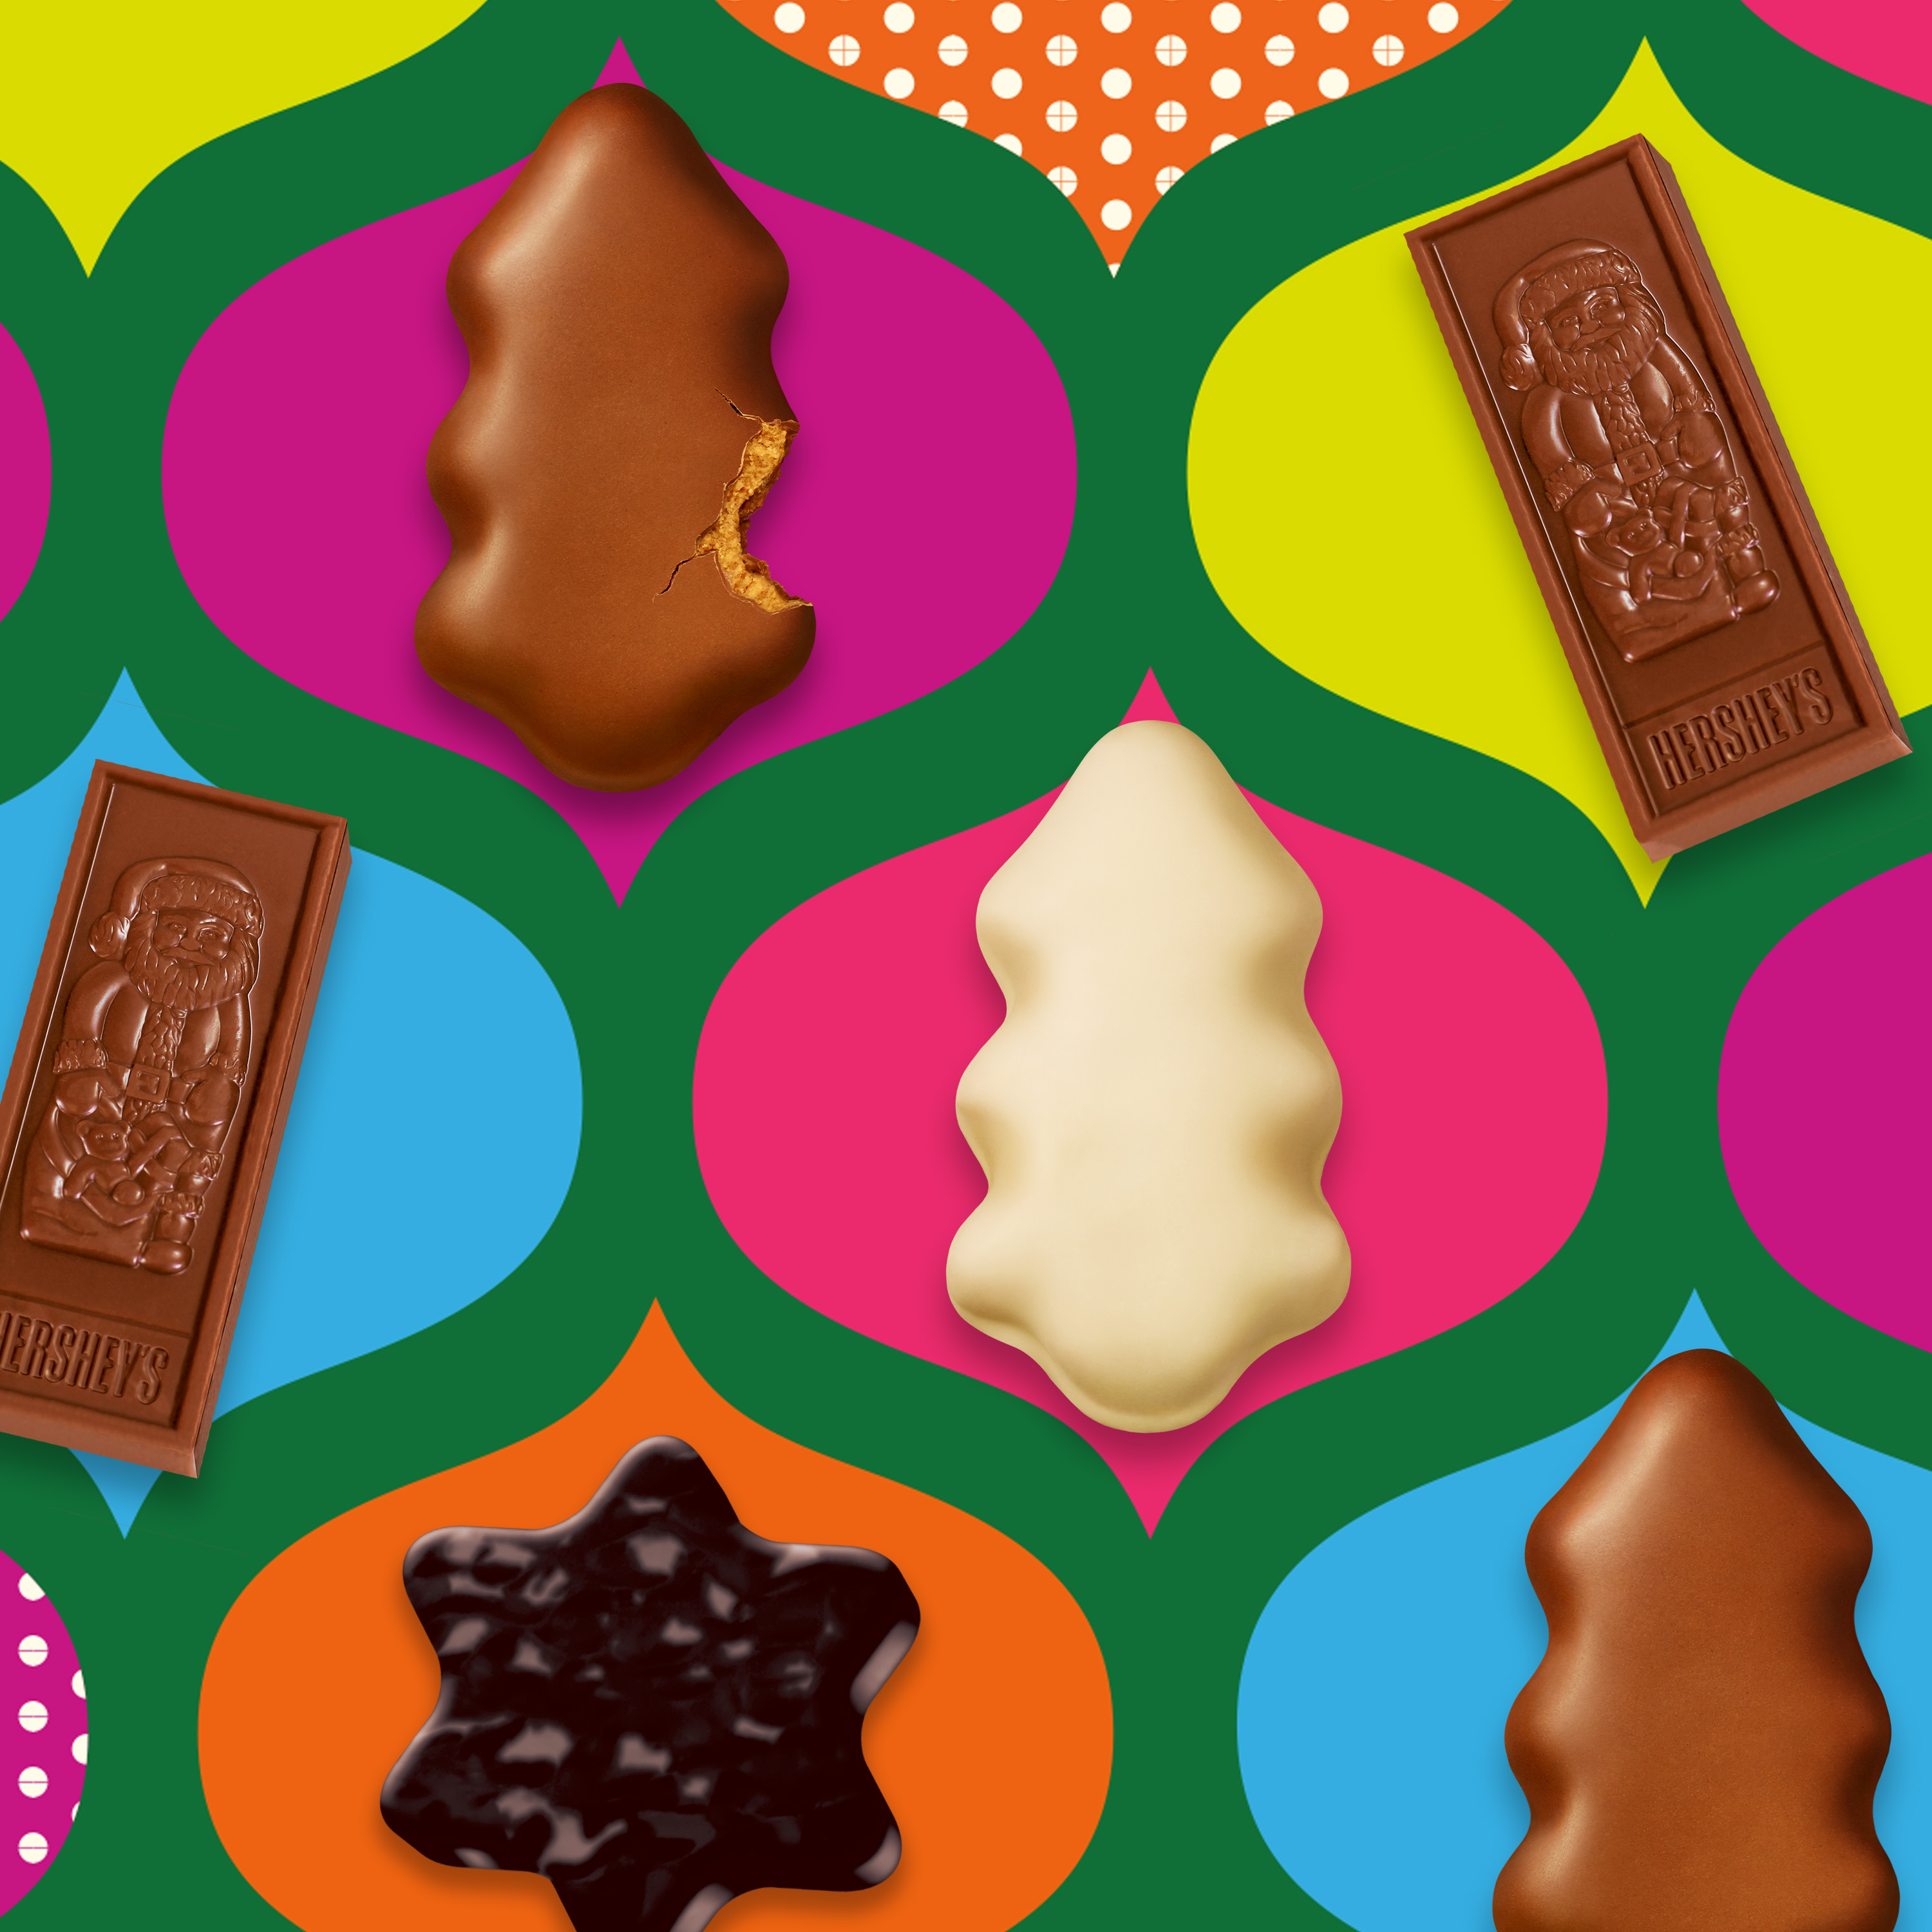 Hershey's, Holiday Milk Chocolate Candy Stocking Stuffer Shapes Assortment Laydown Bag, 21 oz - image 3 of 6